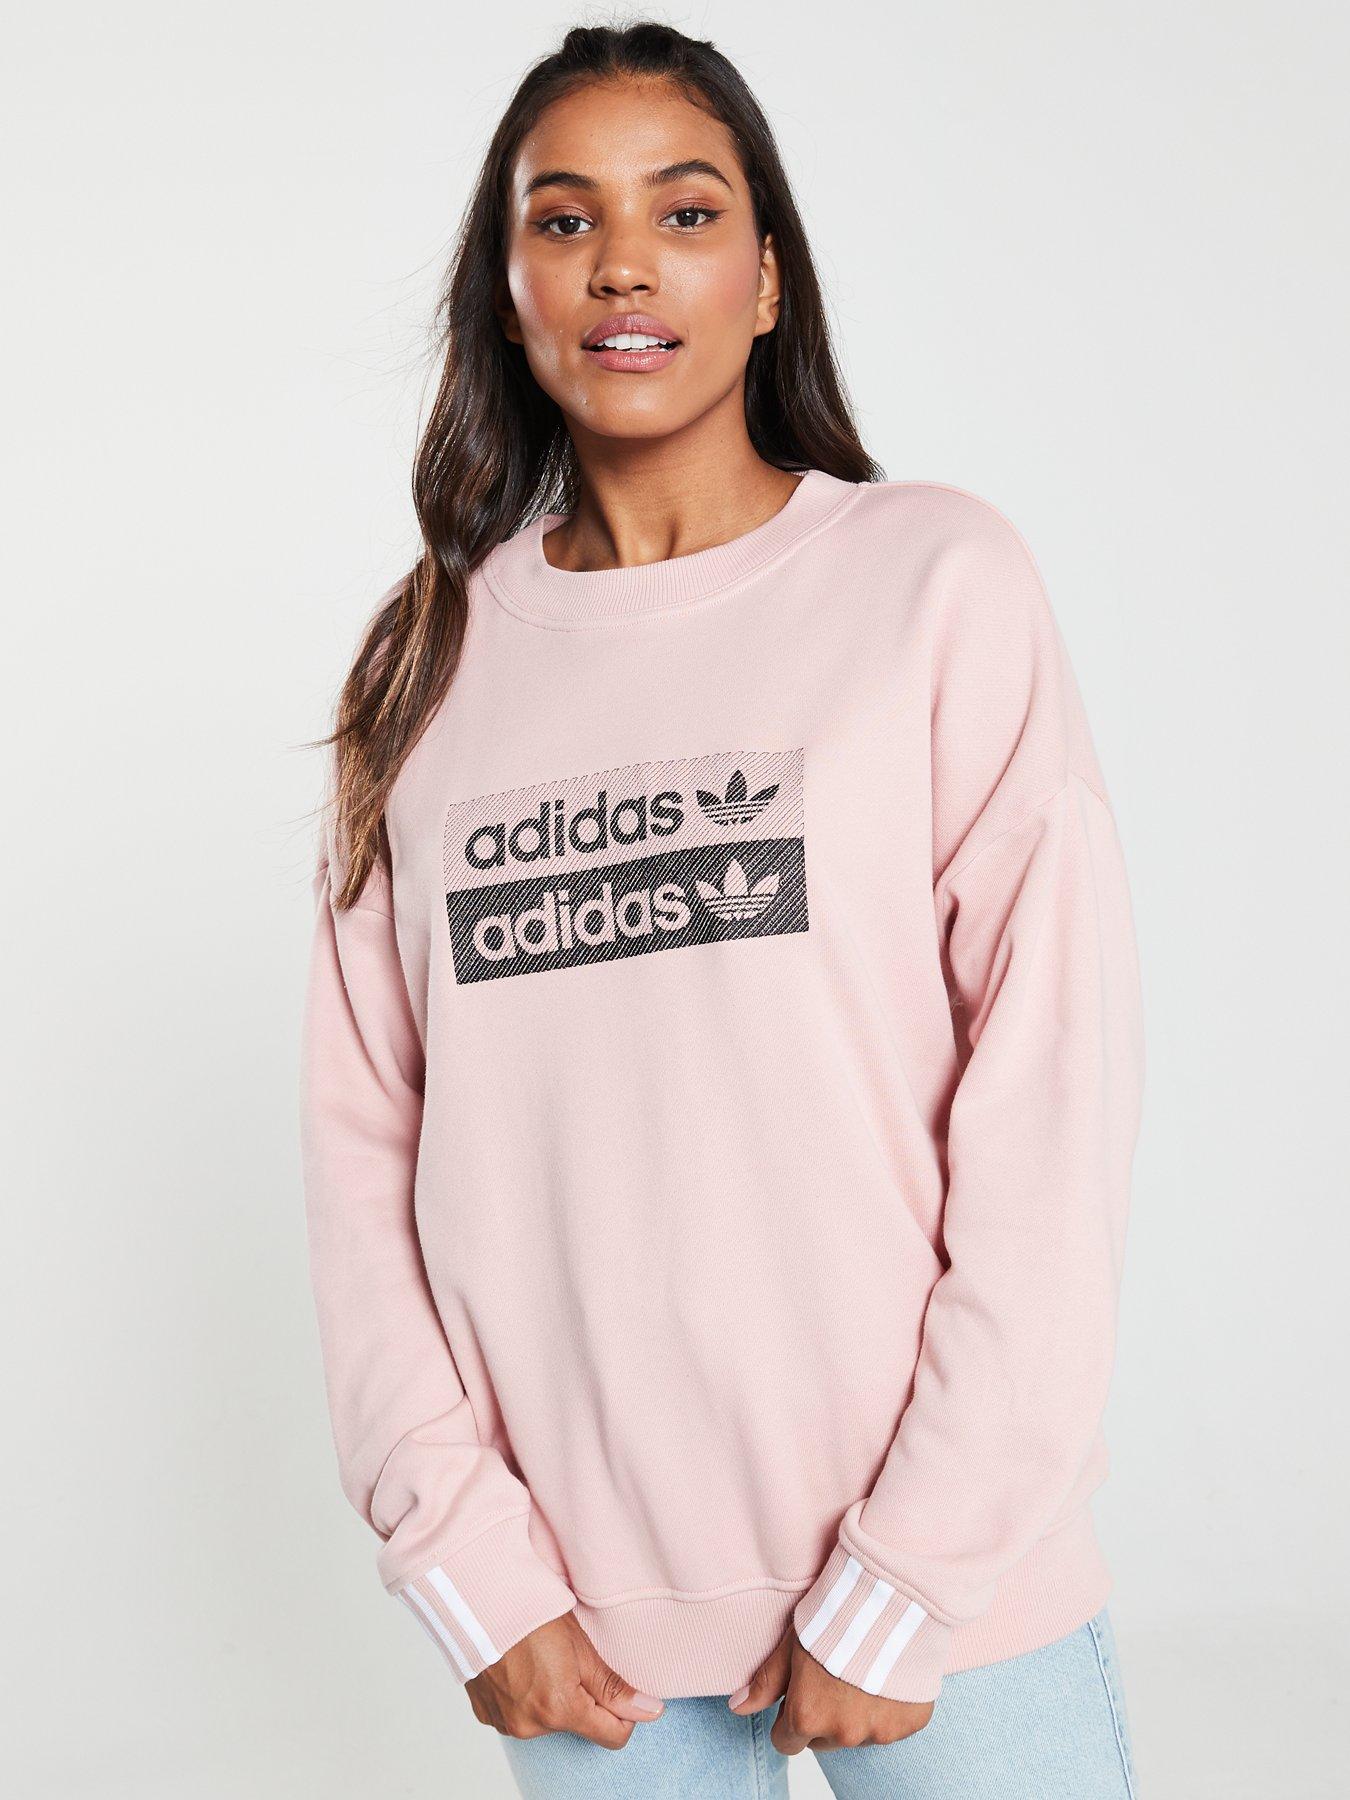 adidas Originals Sweatshirt - Pink 